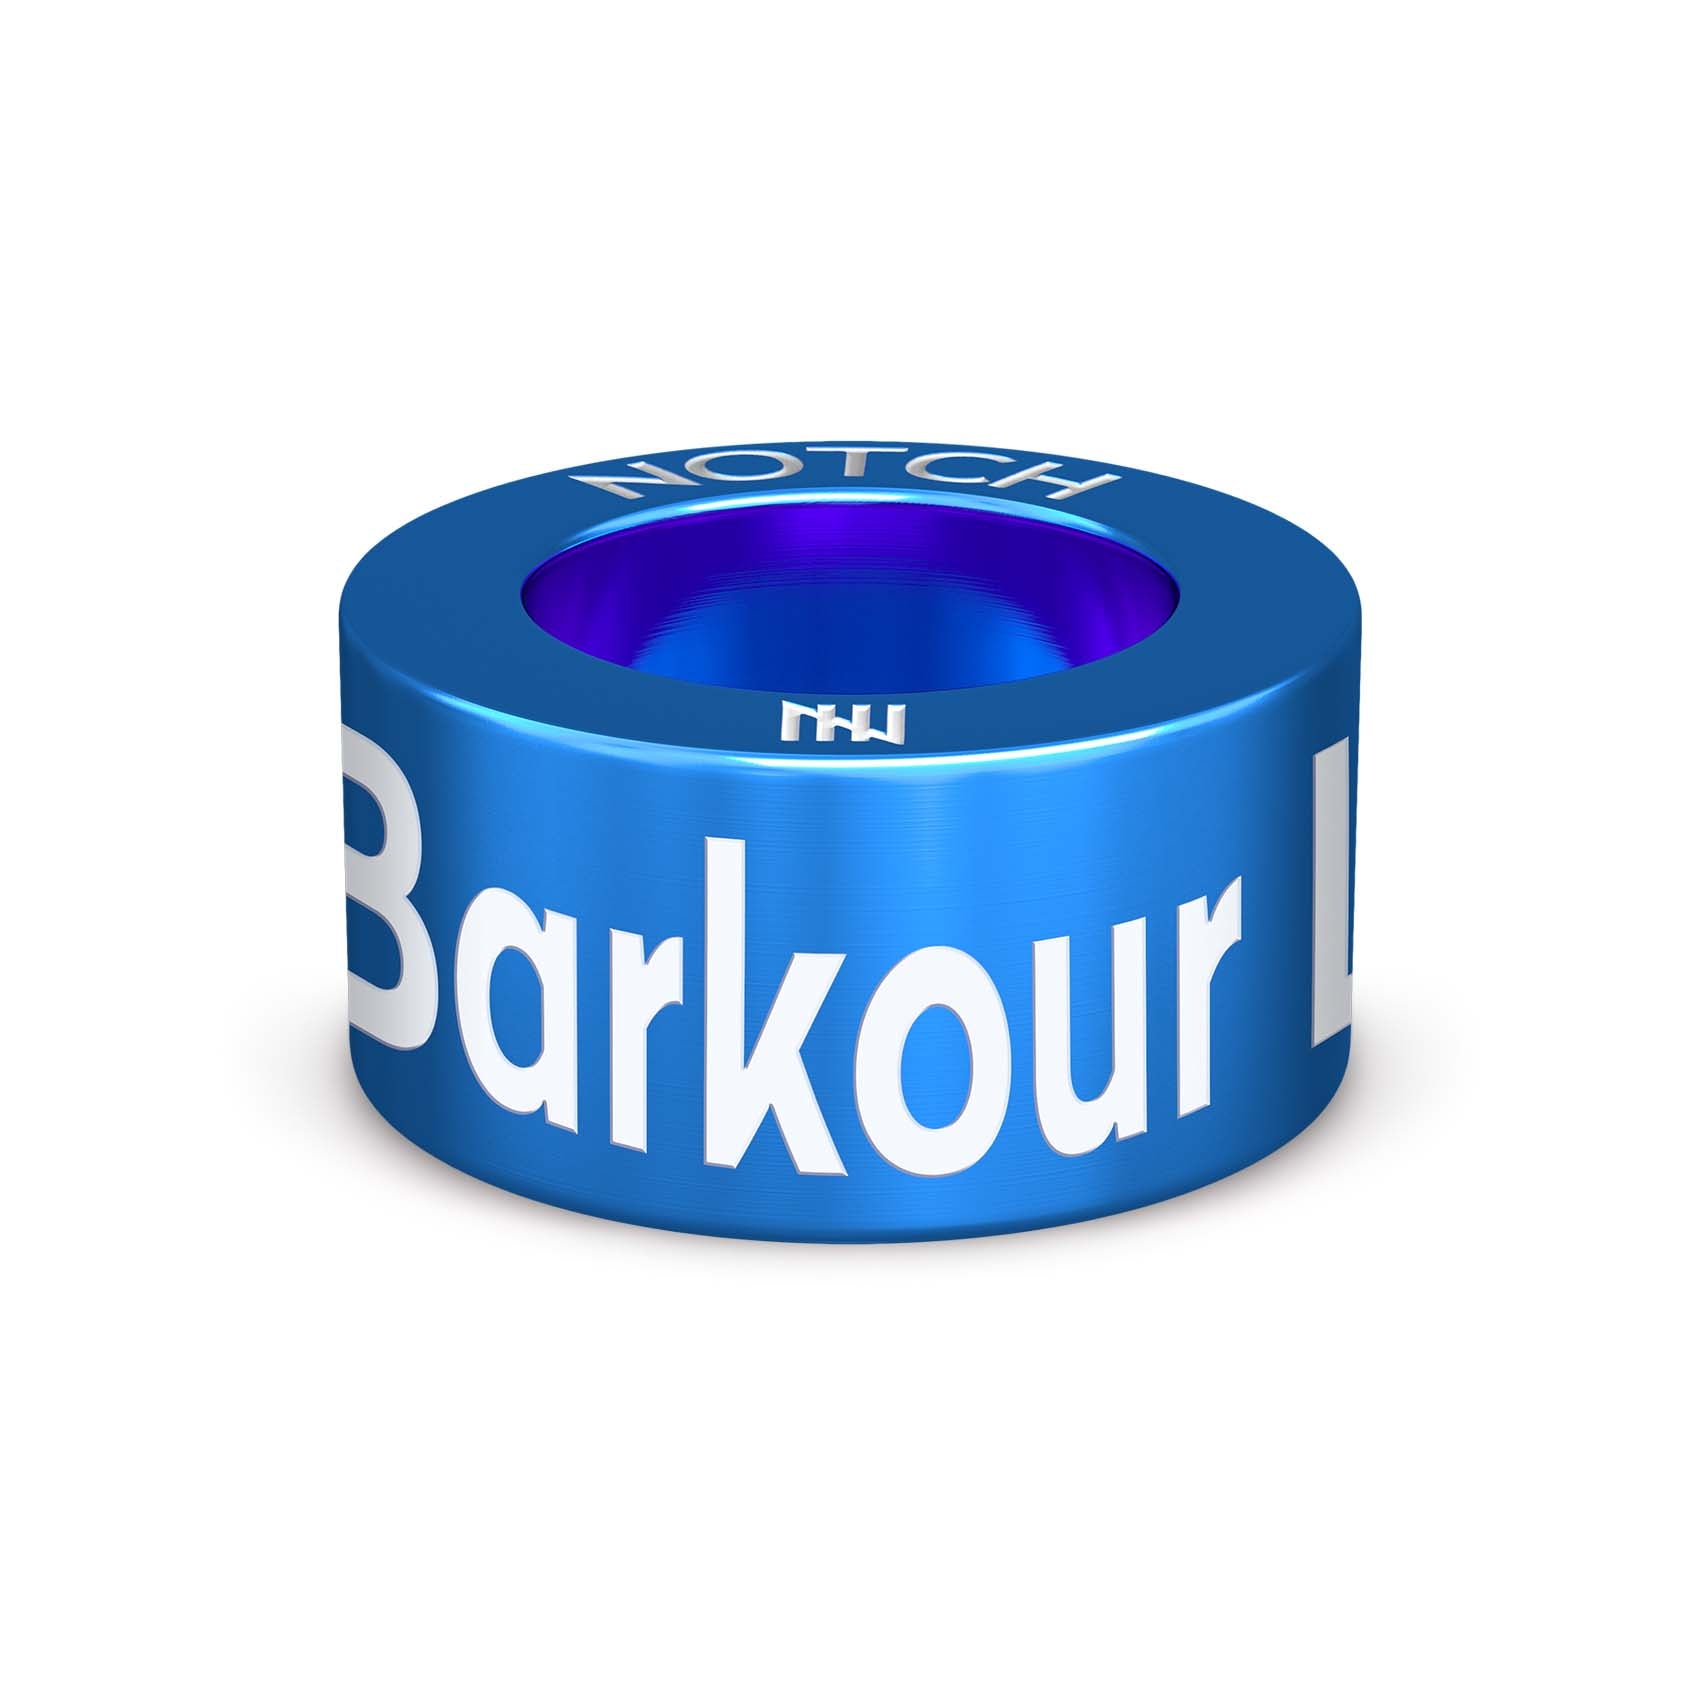 World Online Dog Show Barkour NOTCH Charm